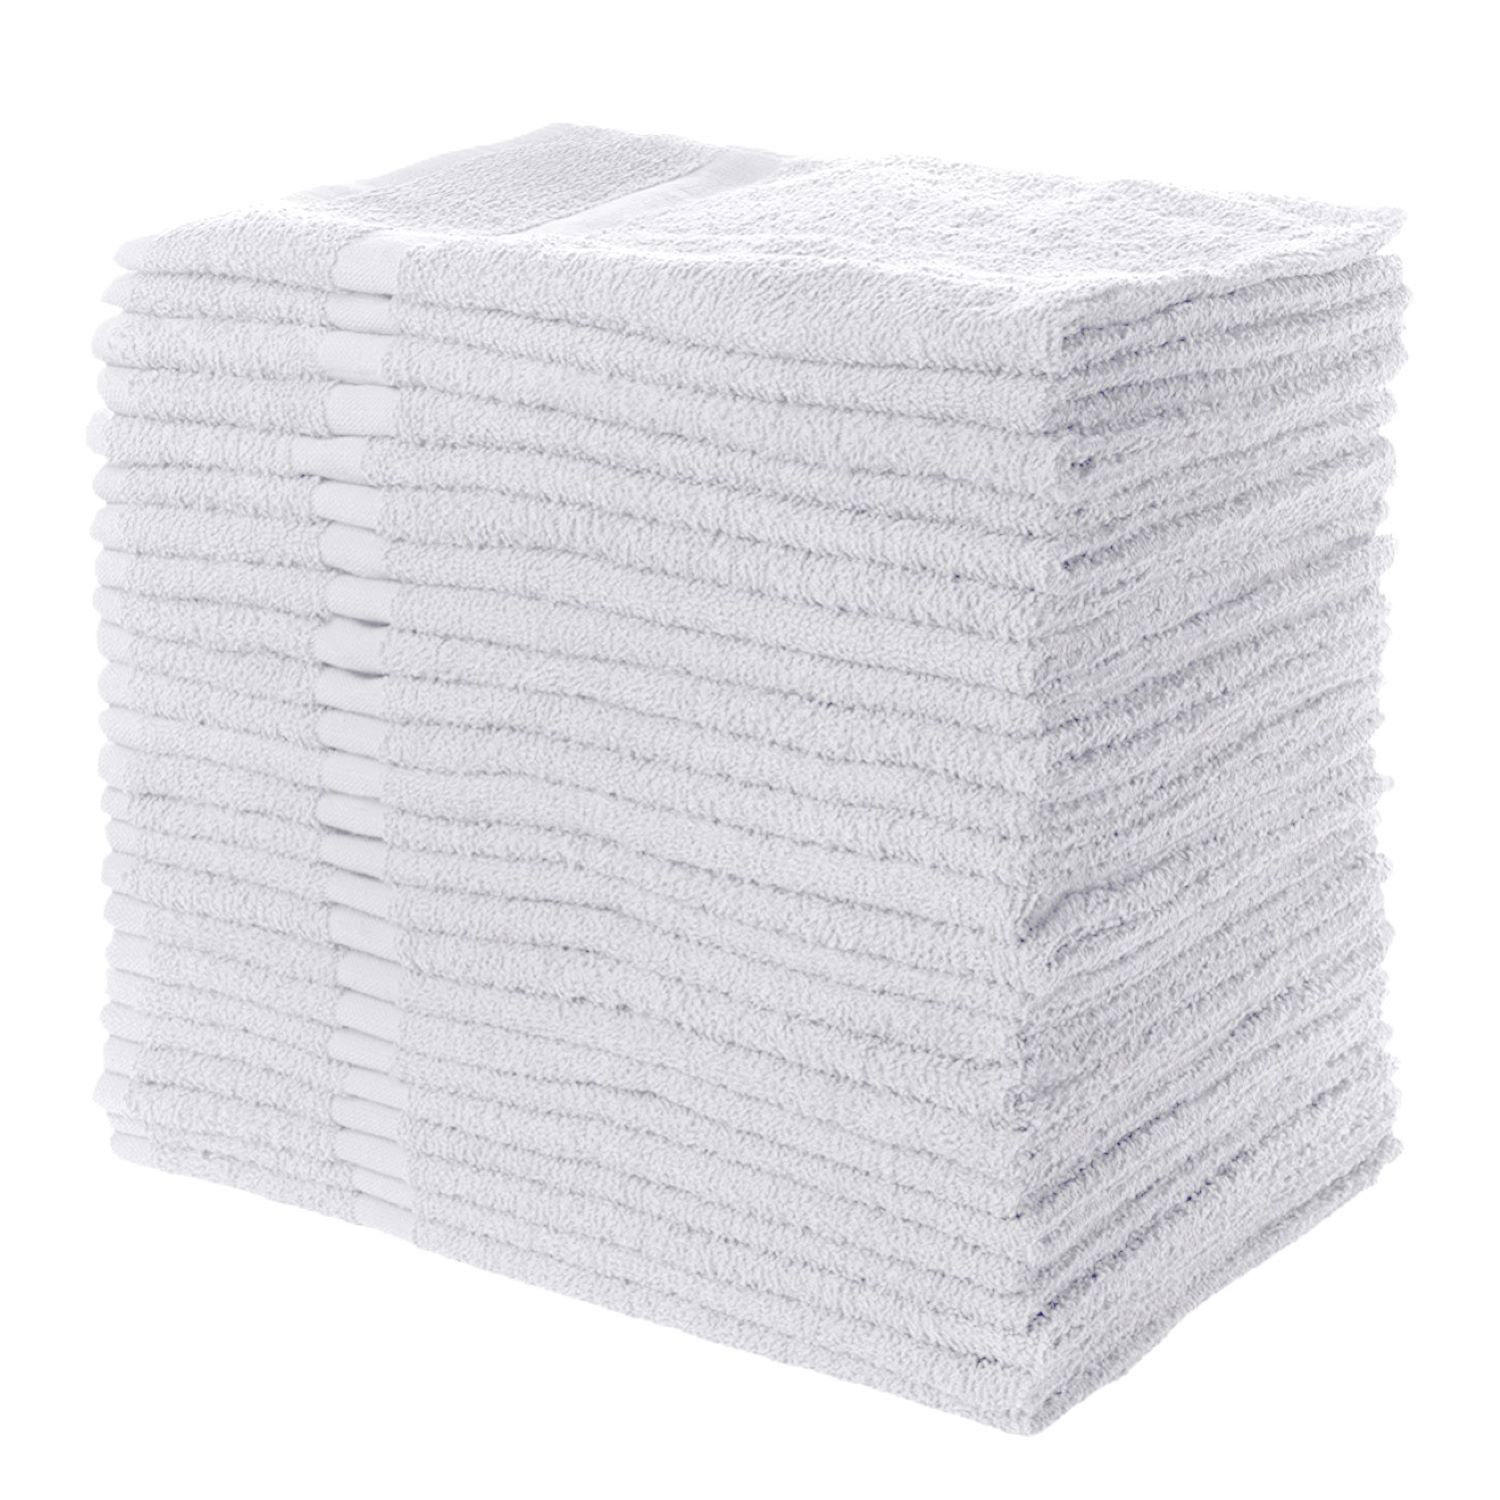 Hometex 100% Cotton Lightweight Hand Towels 12-pk. (16' x 27'), White